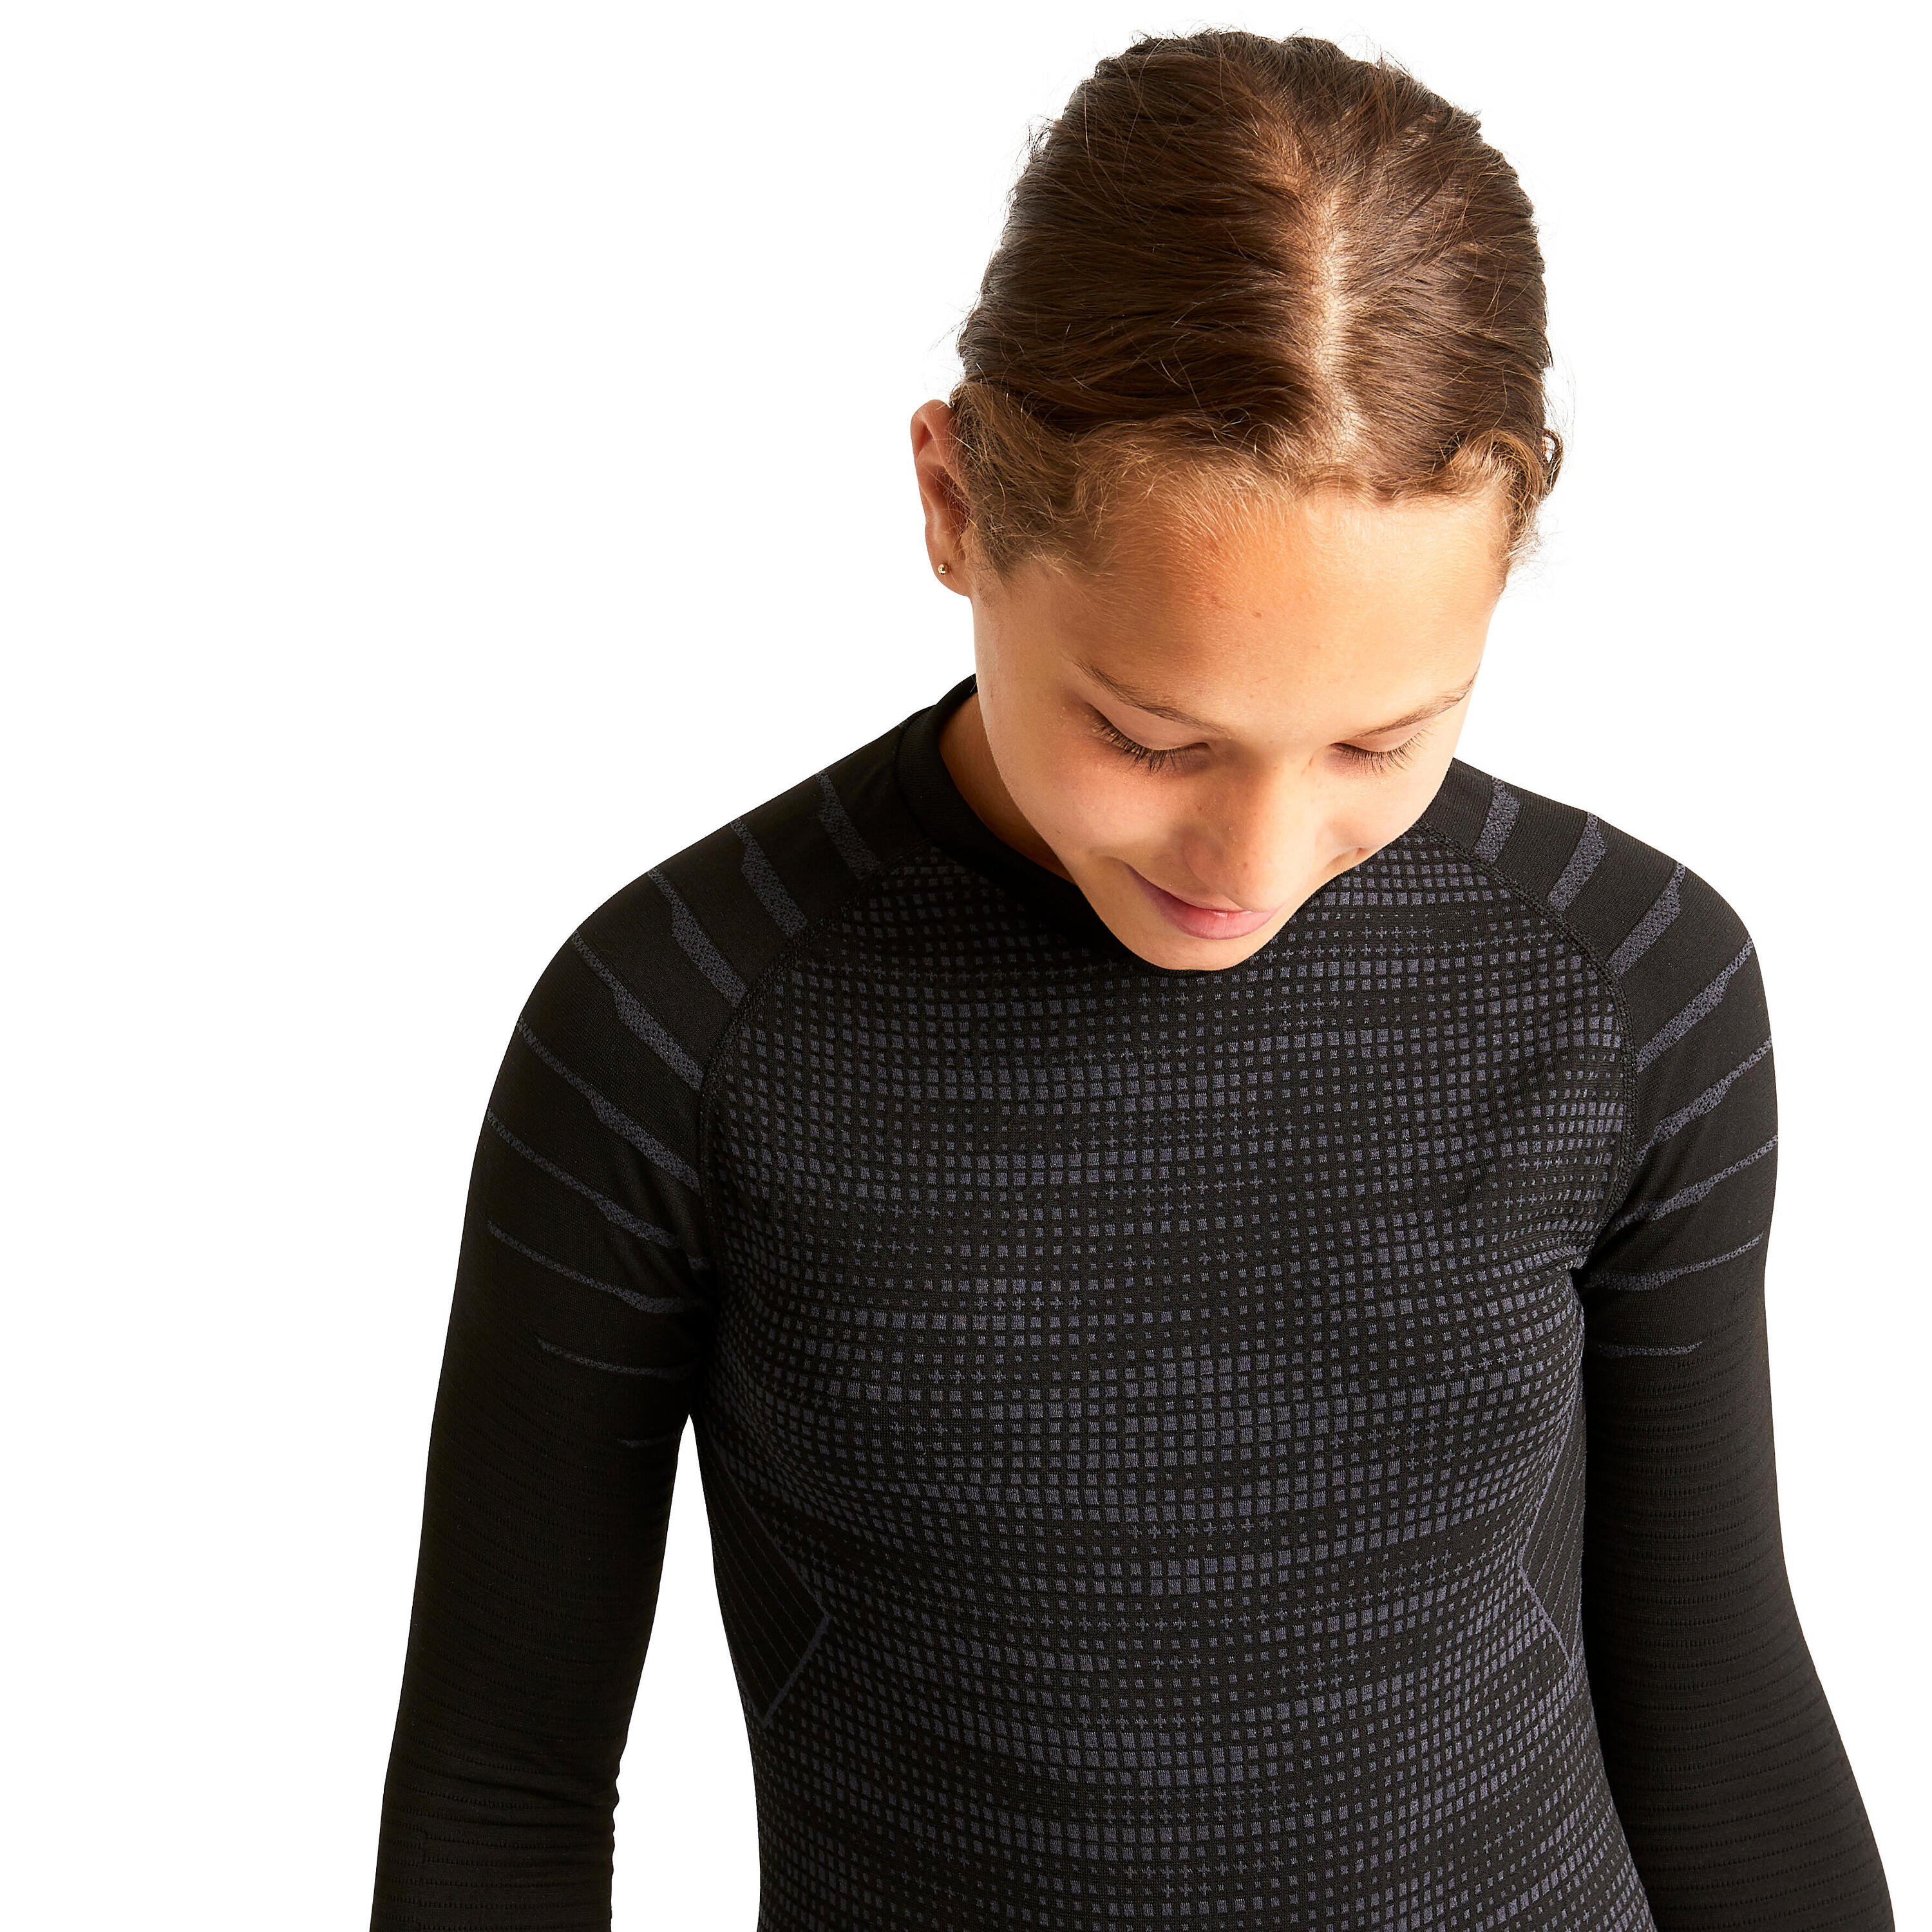 Kids' Long-Sleeved Thermal Base Layer Top Keepdry 500 - Black 9/10